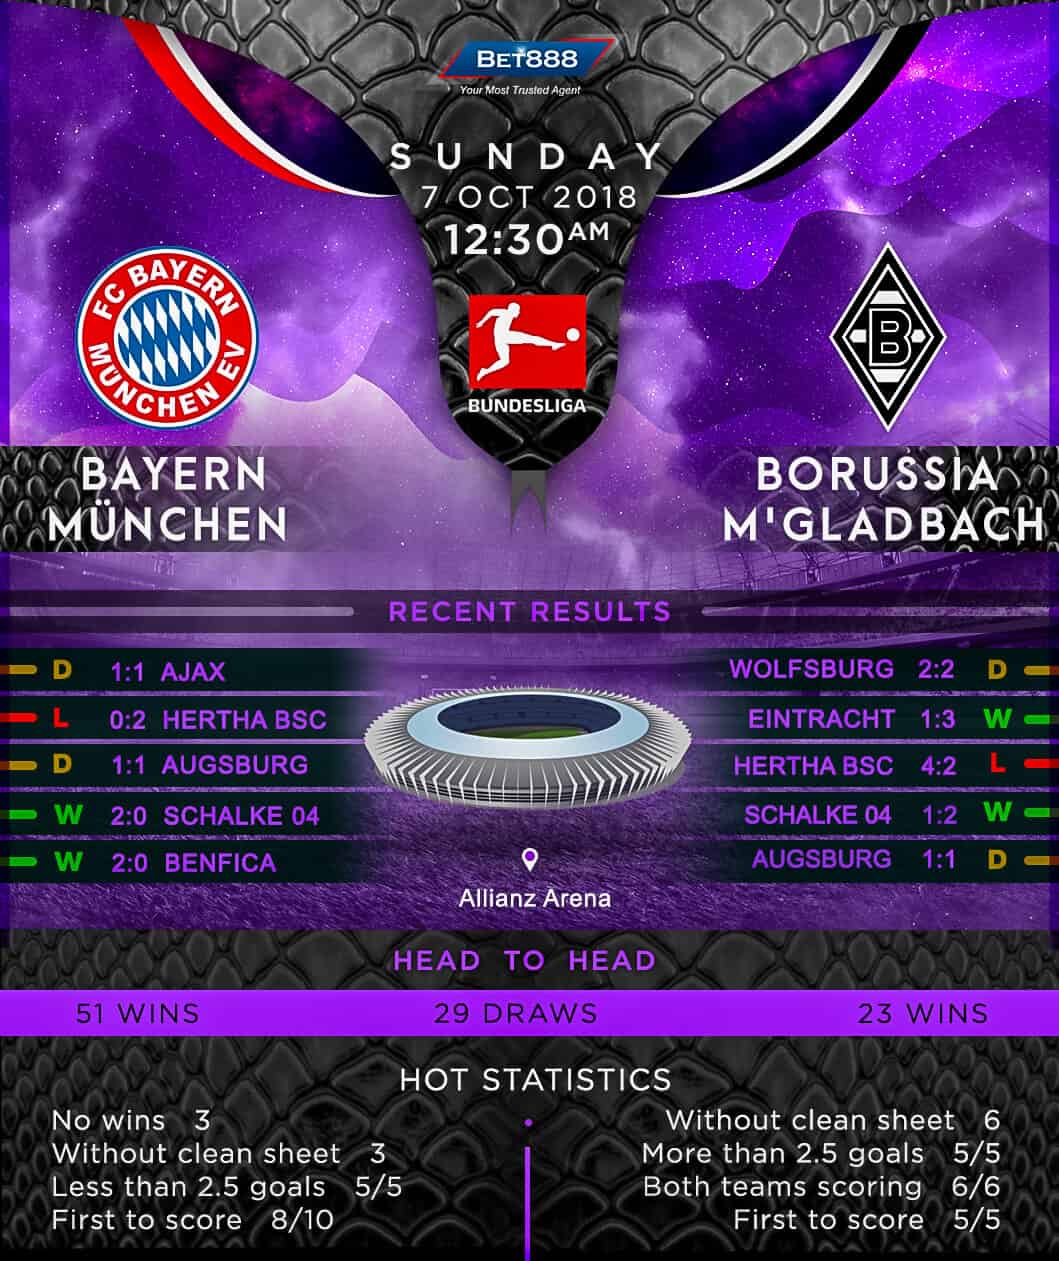 Bayern Munich vs Borussia M’gladbach 07/10/18